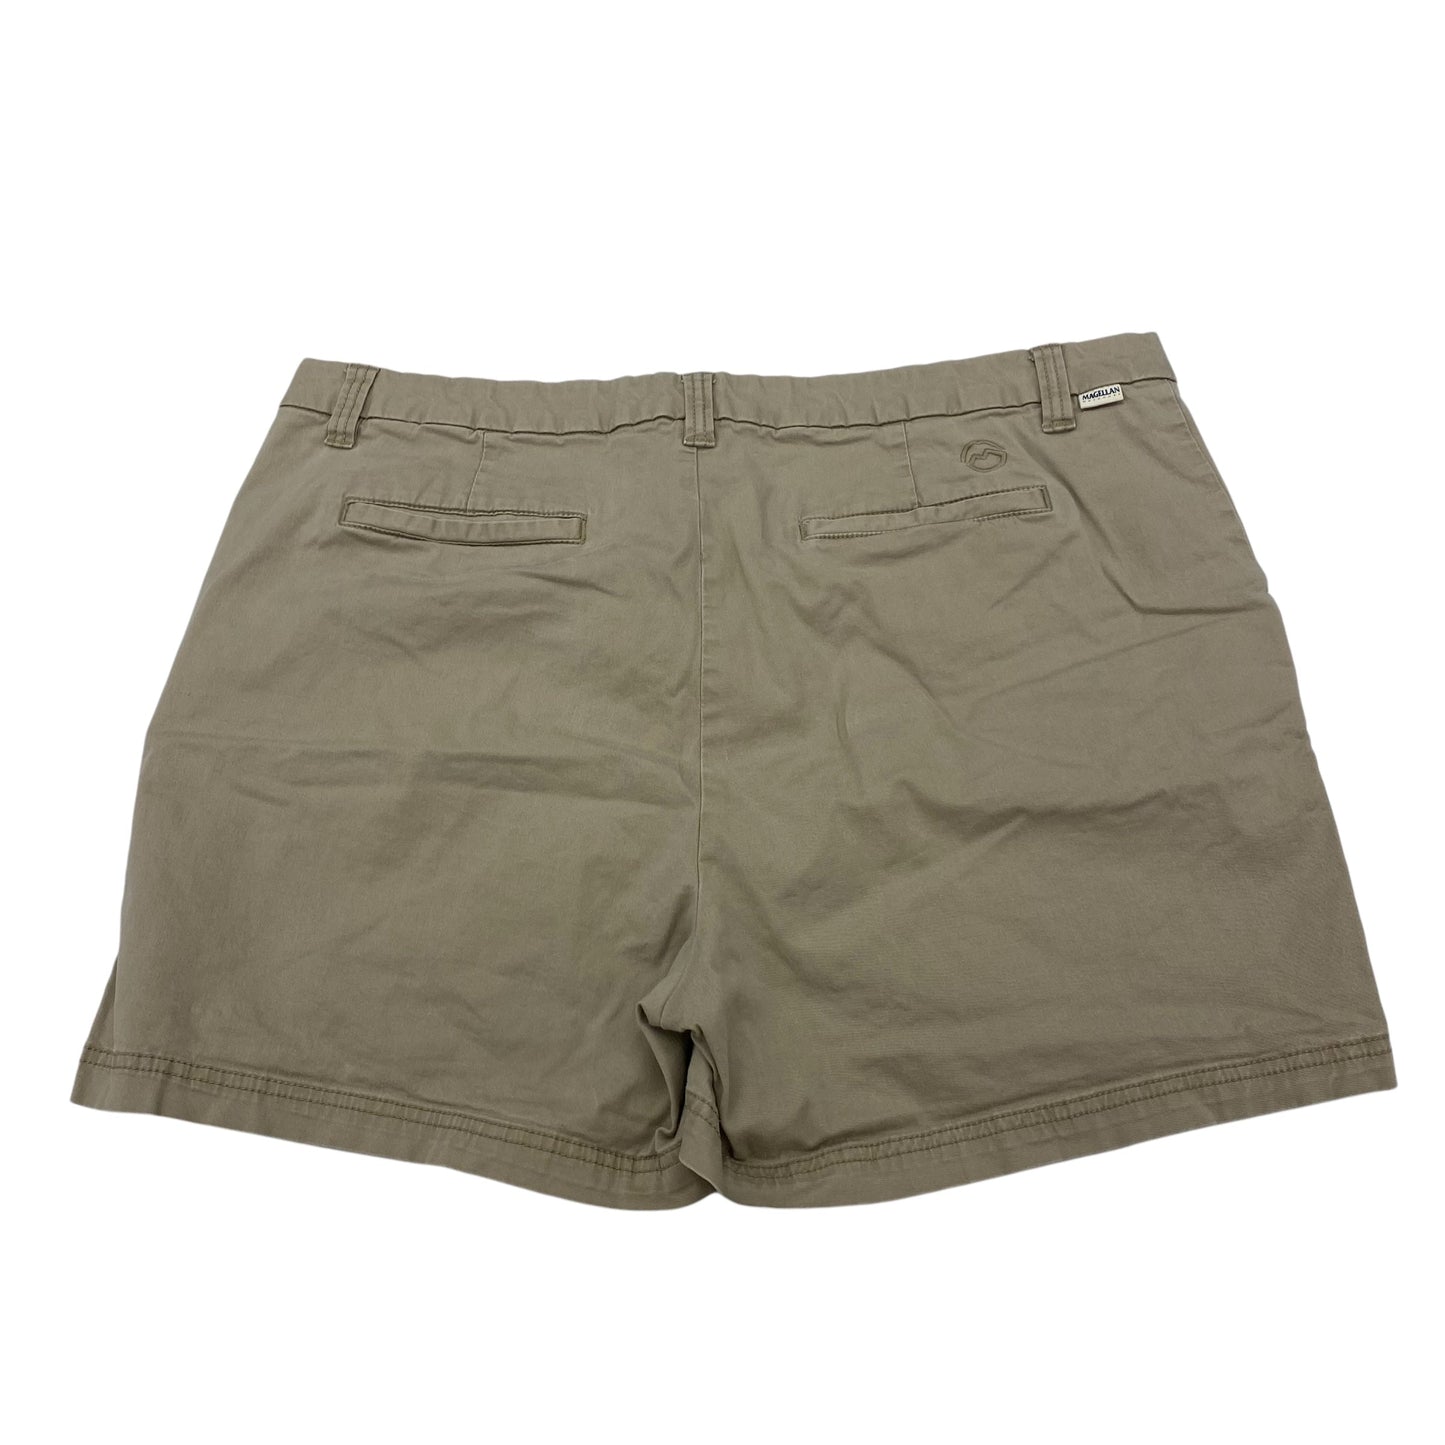 Shorts By Magellan  Size: 18